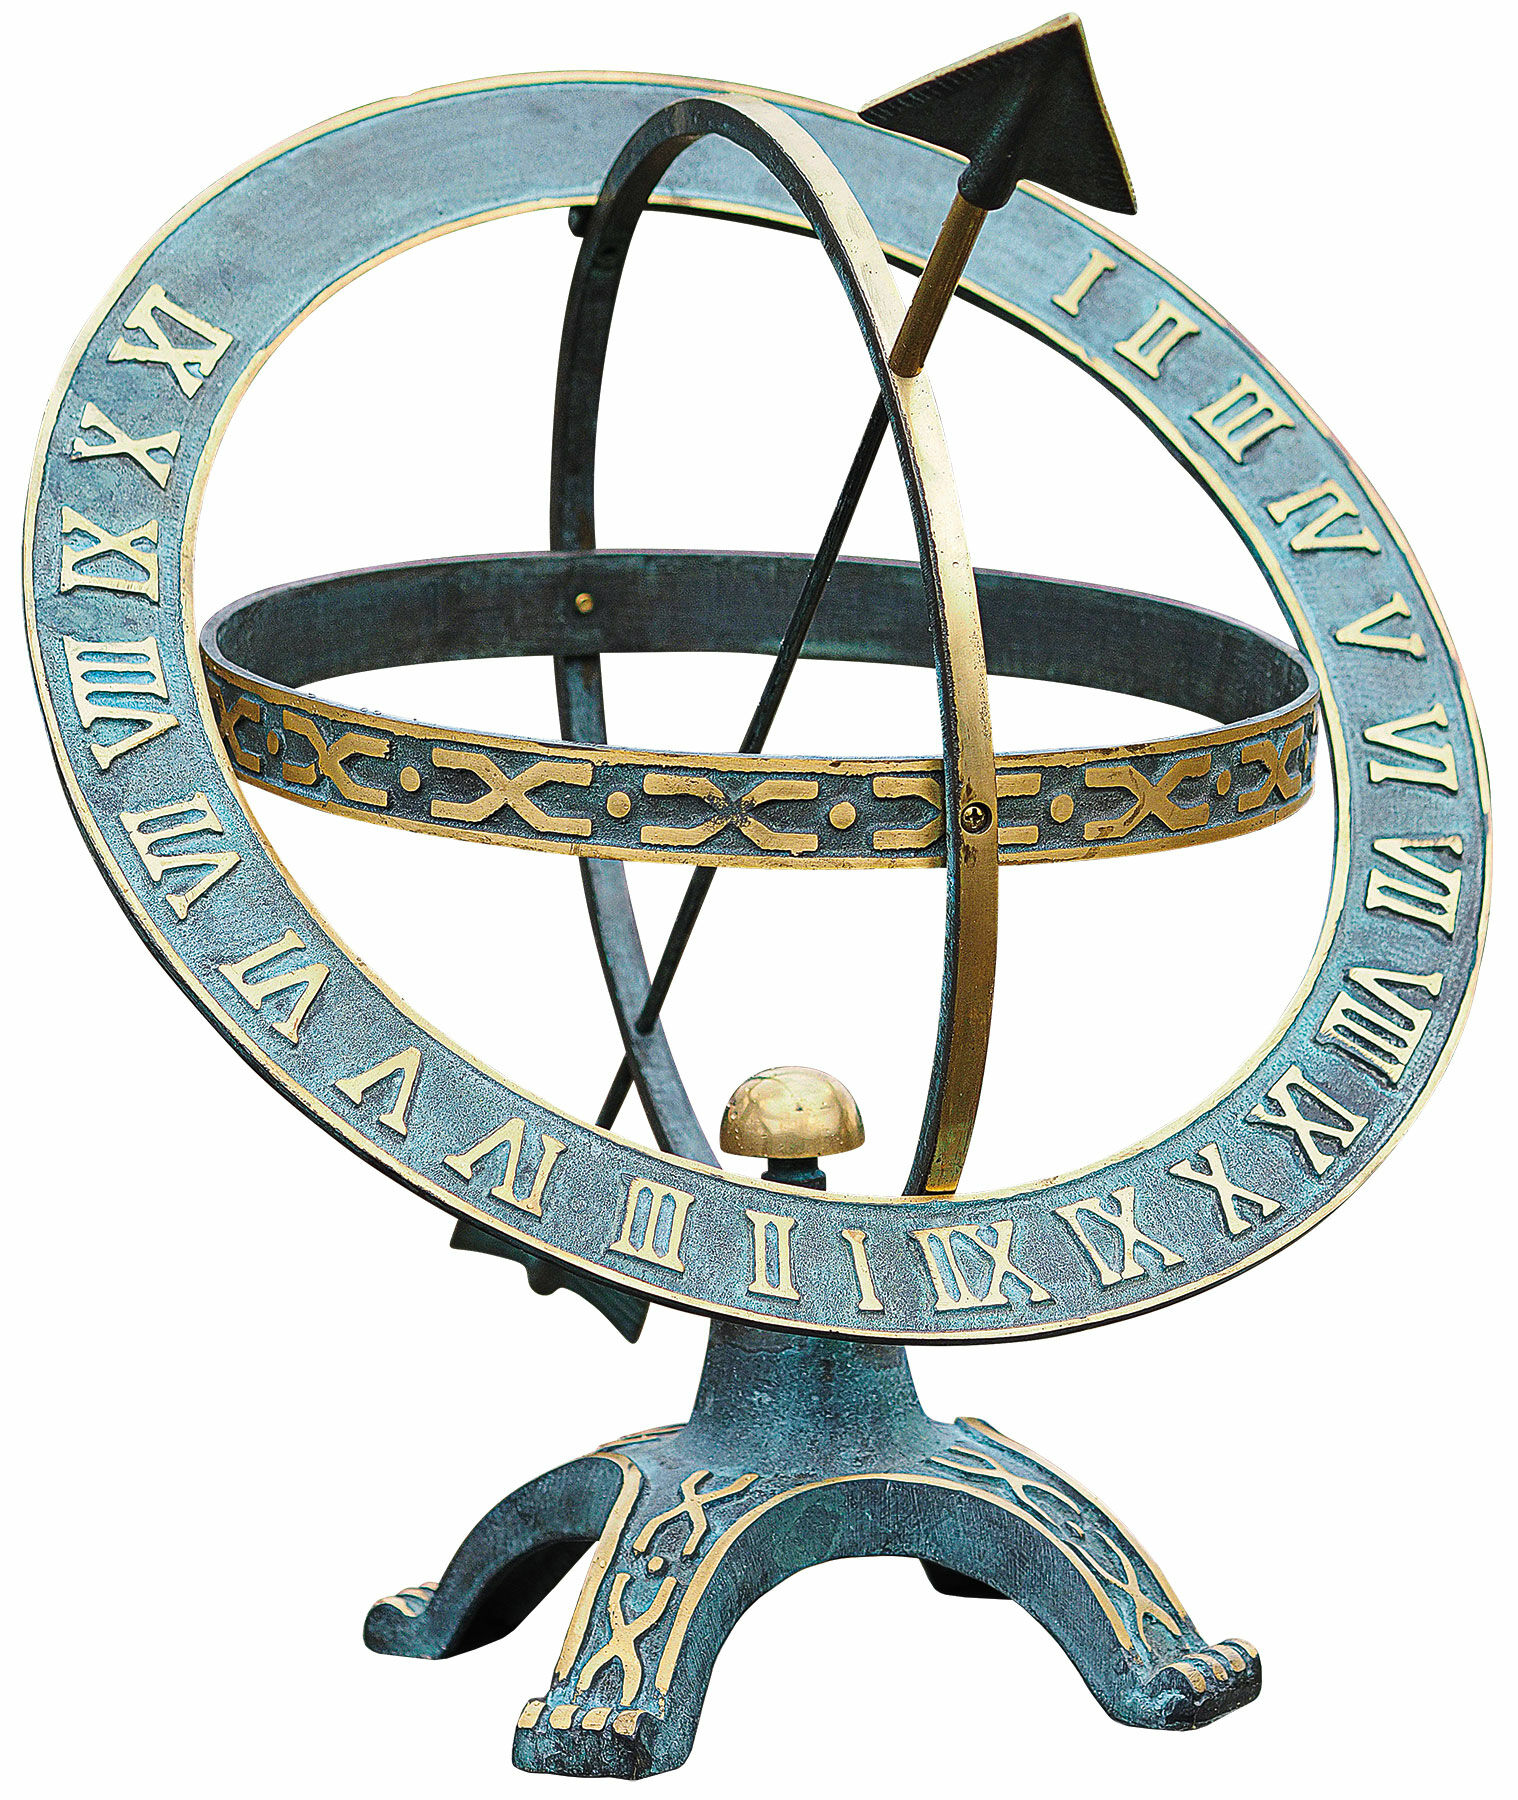 Solur "Timering", bronze